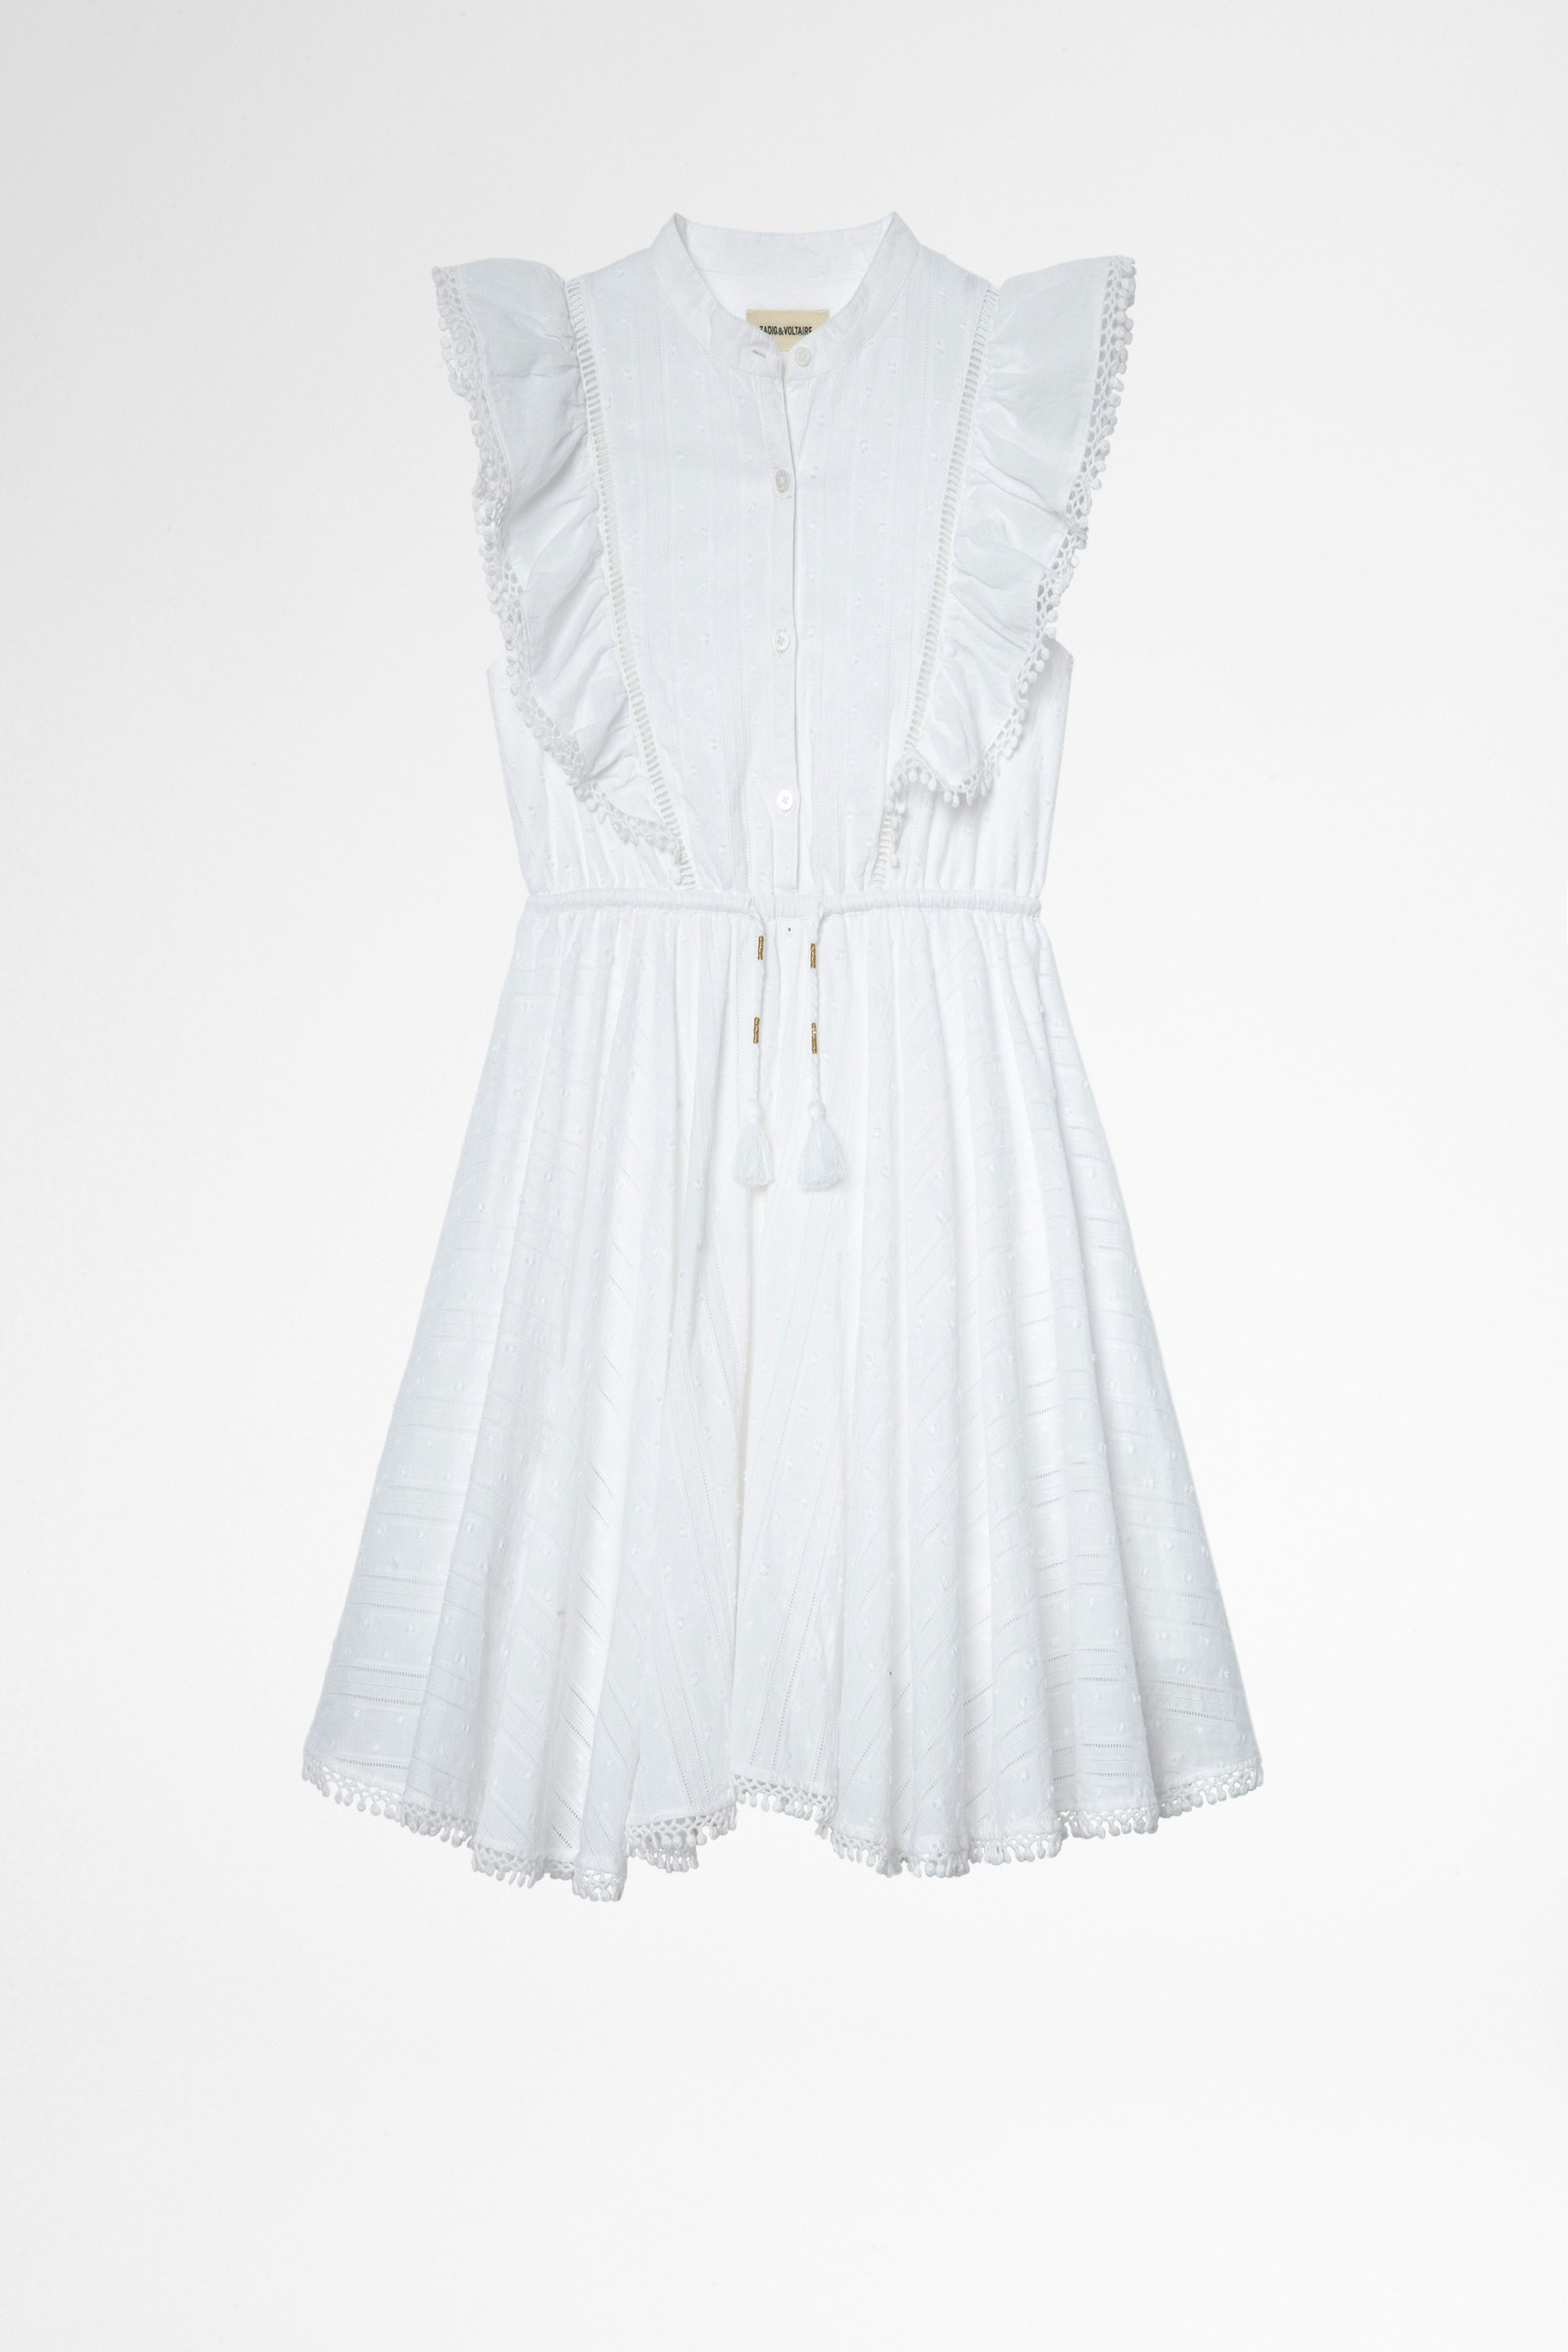 Ranil Children's ドレス Children's cotton dress in white